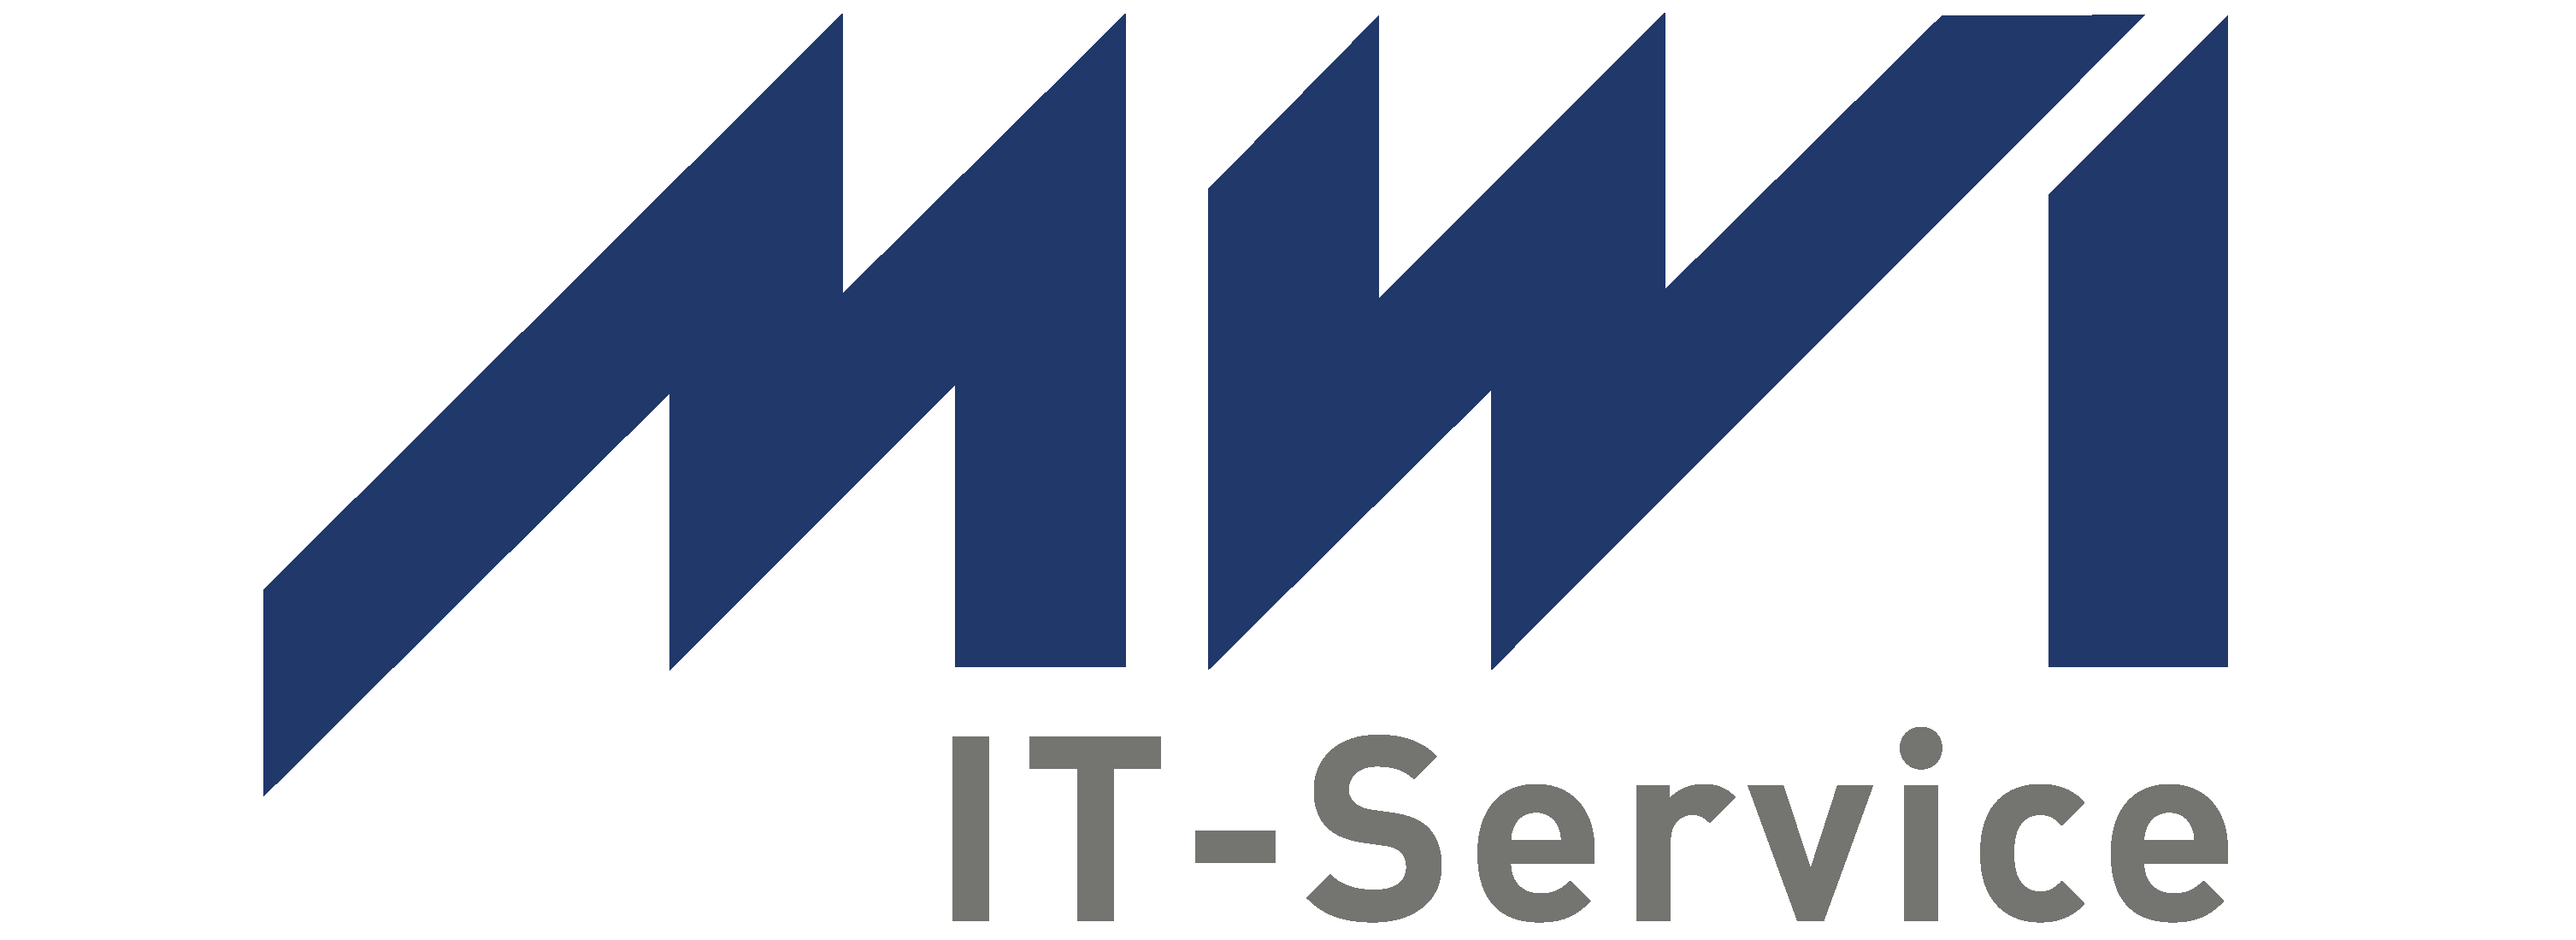 MWI IT-Service